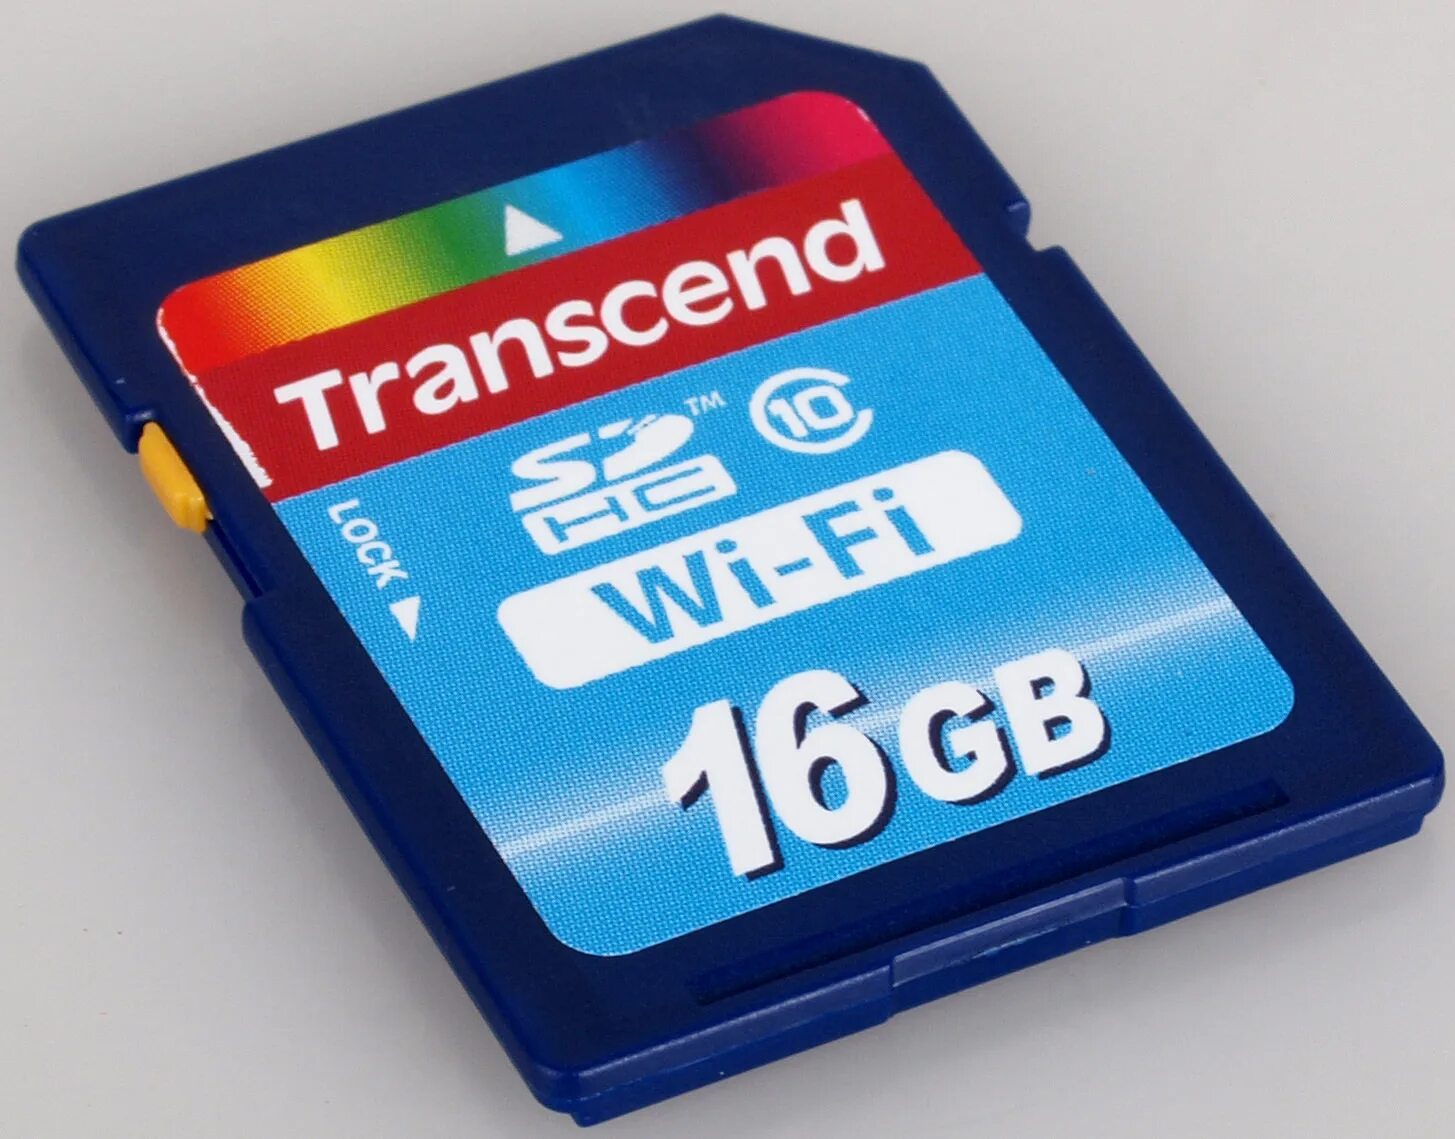 Transcend SD Card 32gb. Transcend SDHC 16gb class 10. Transcend 16gb SDHC Card class 10 SD-WIFI. SD Card 16 GB.